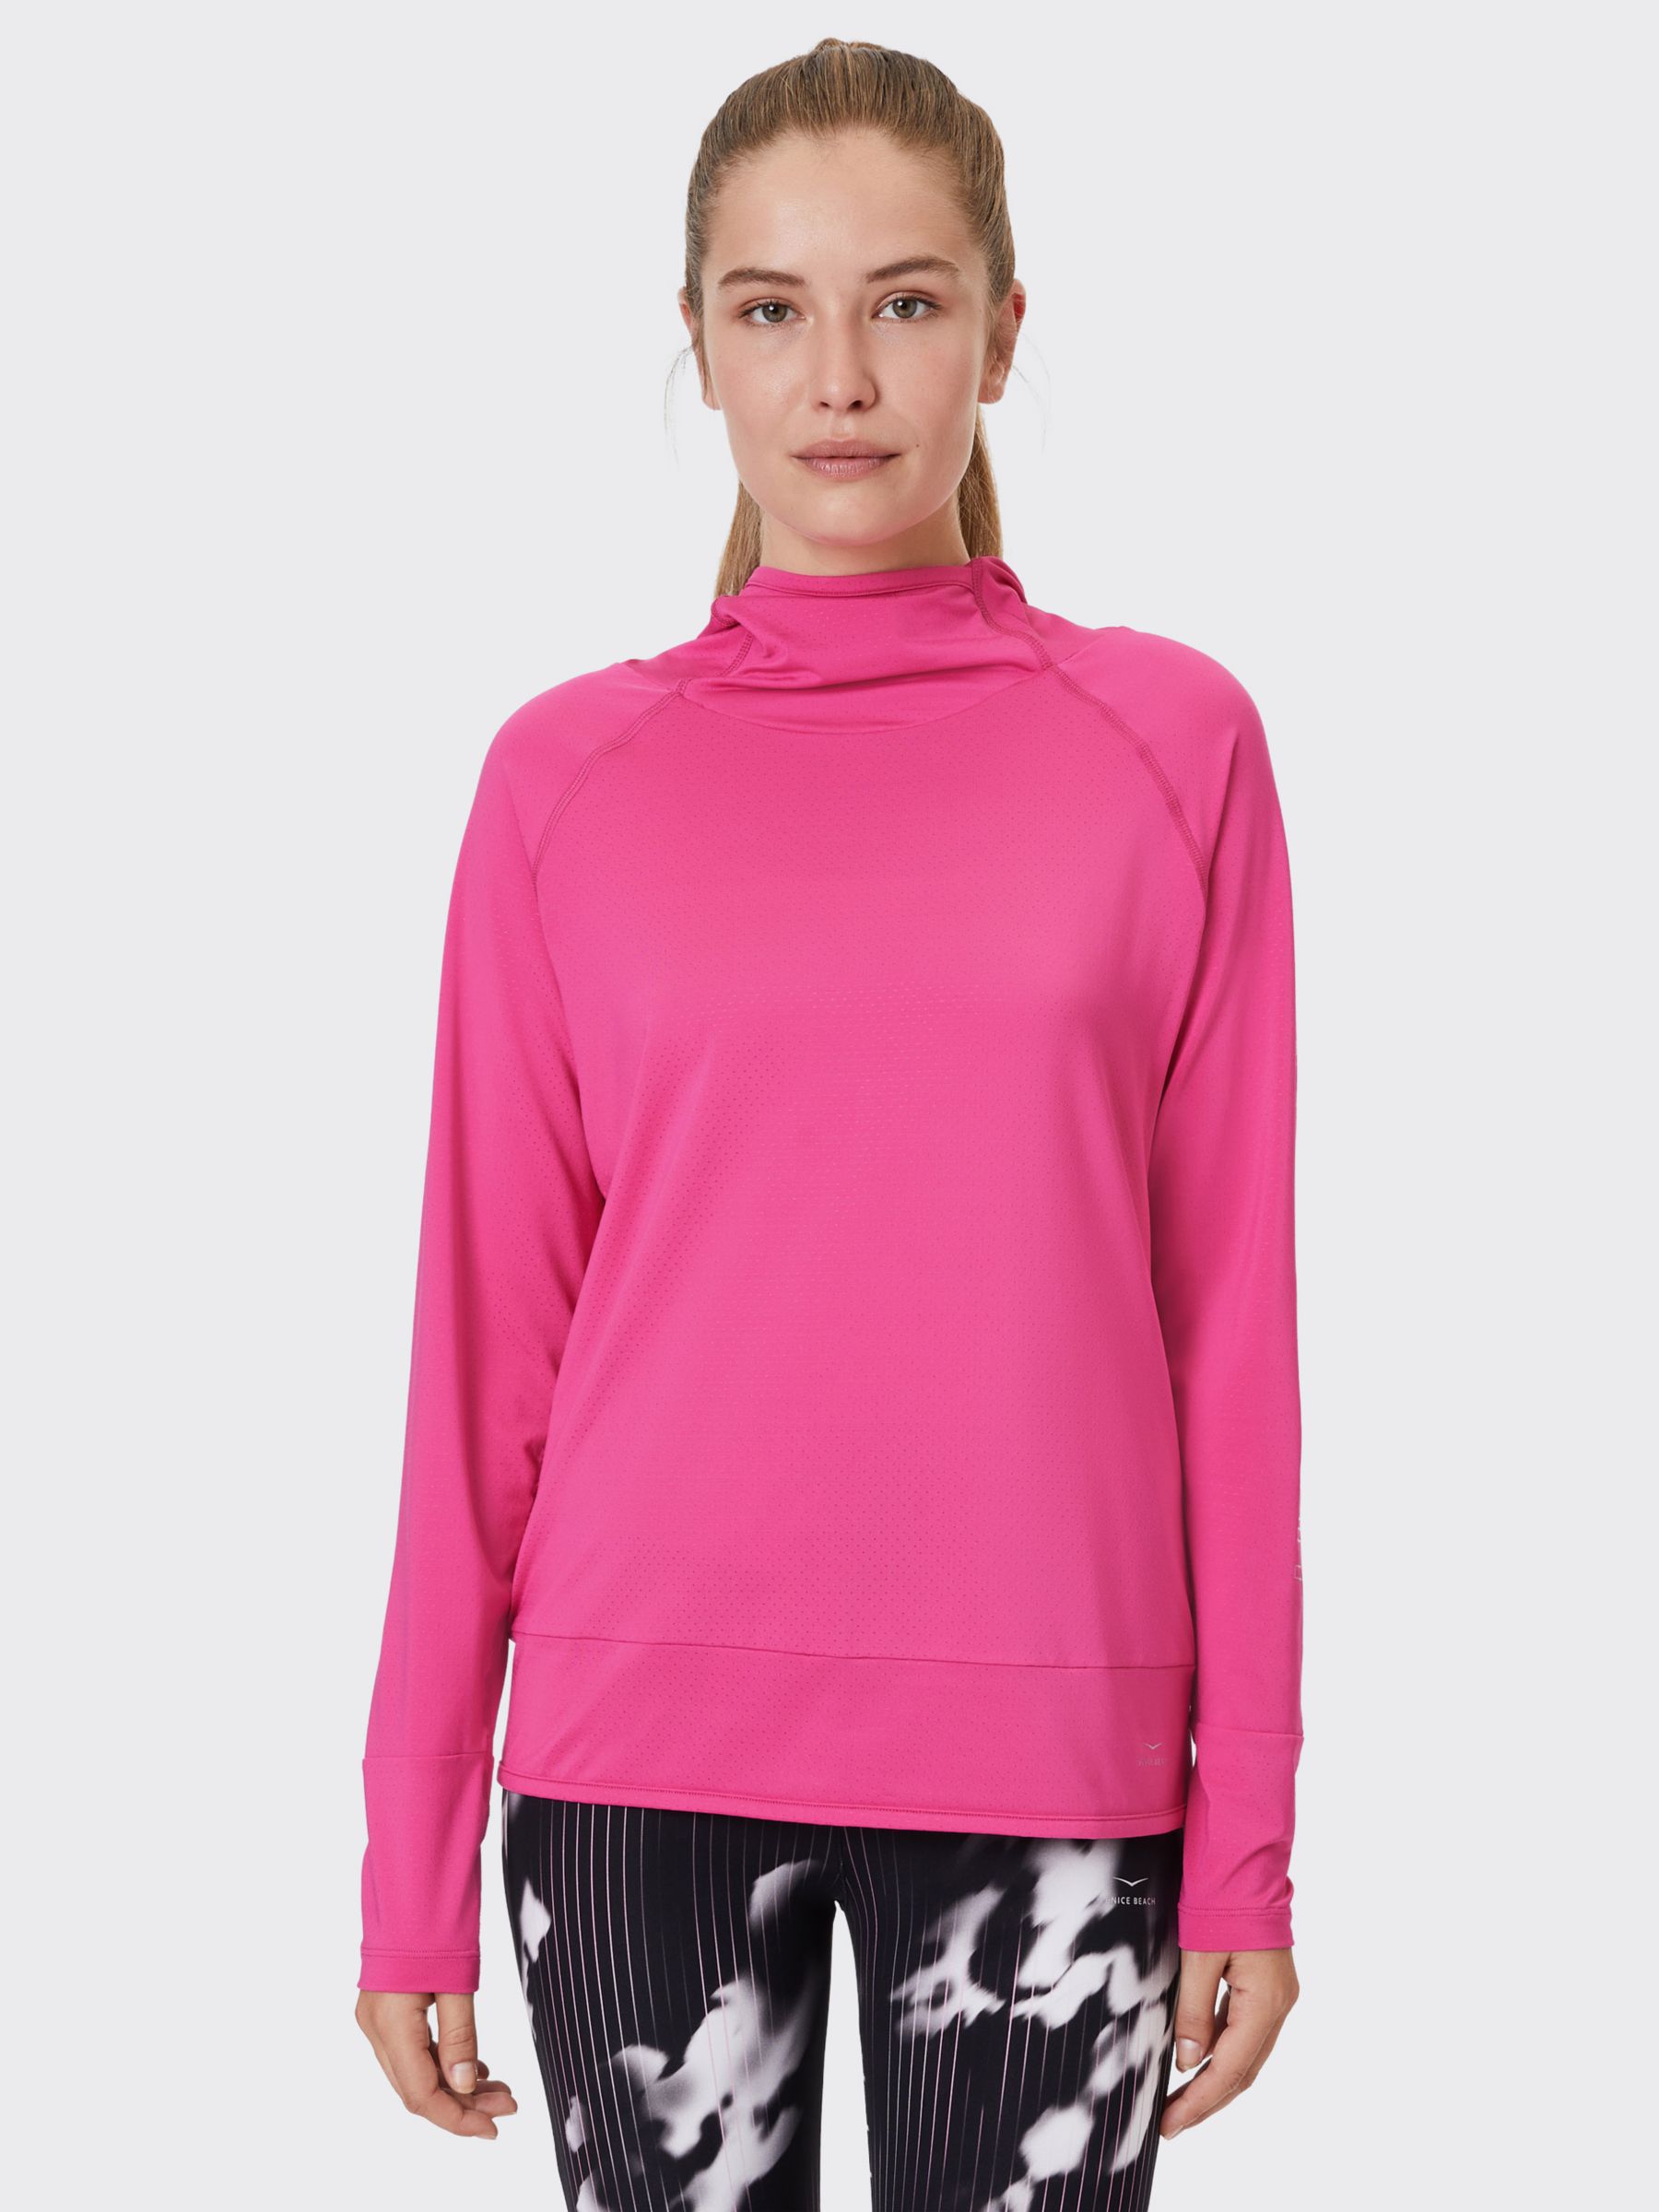 Venice Beach Minka Long Sleeve Hooded Top, Virtual Pink, XS